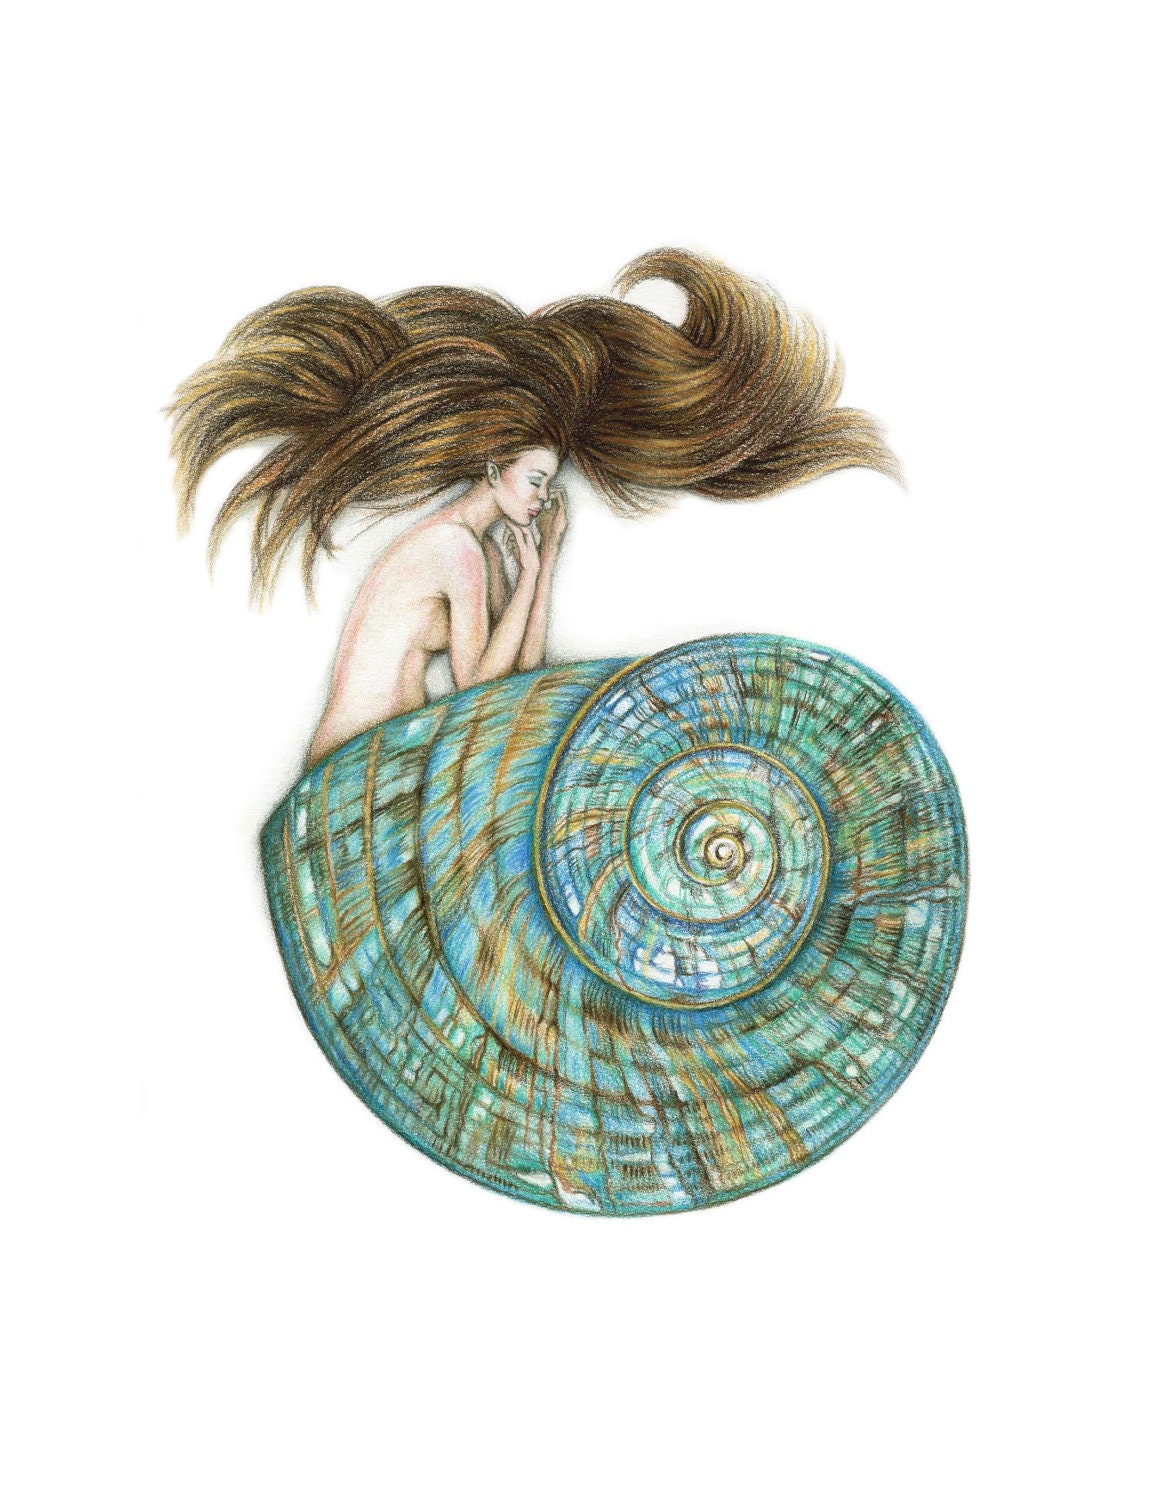 Jade Turbo Shell Mermaid Art Print 8x10 Teal Blue Beach Decor - elvesfairies